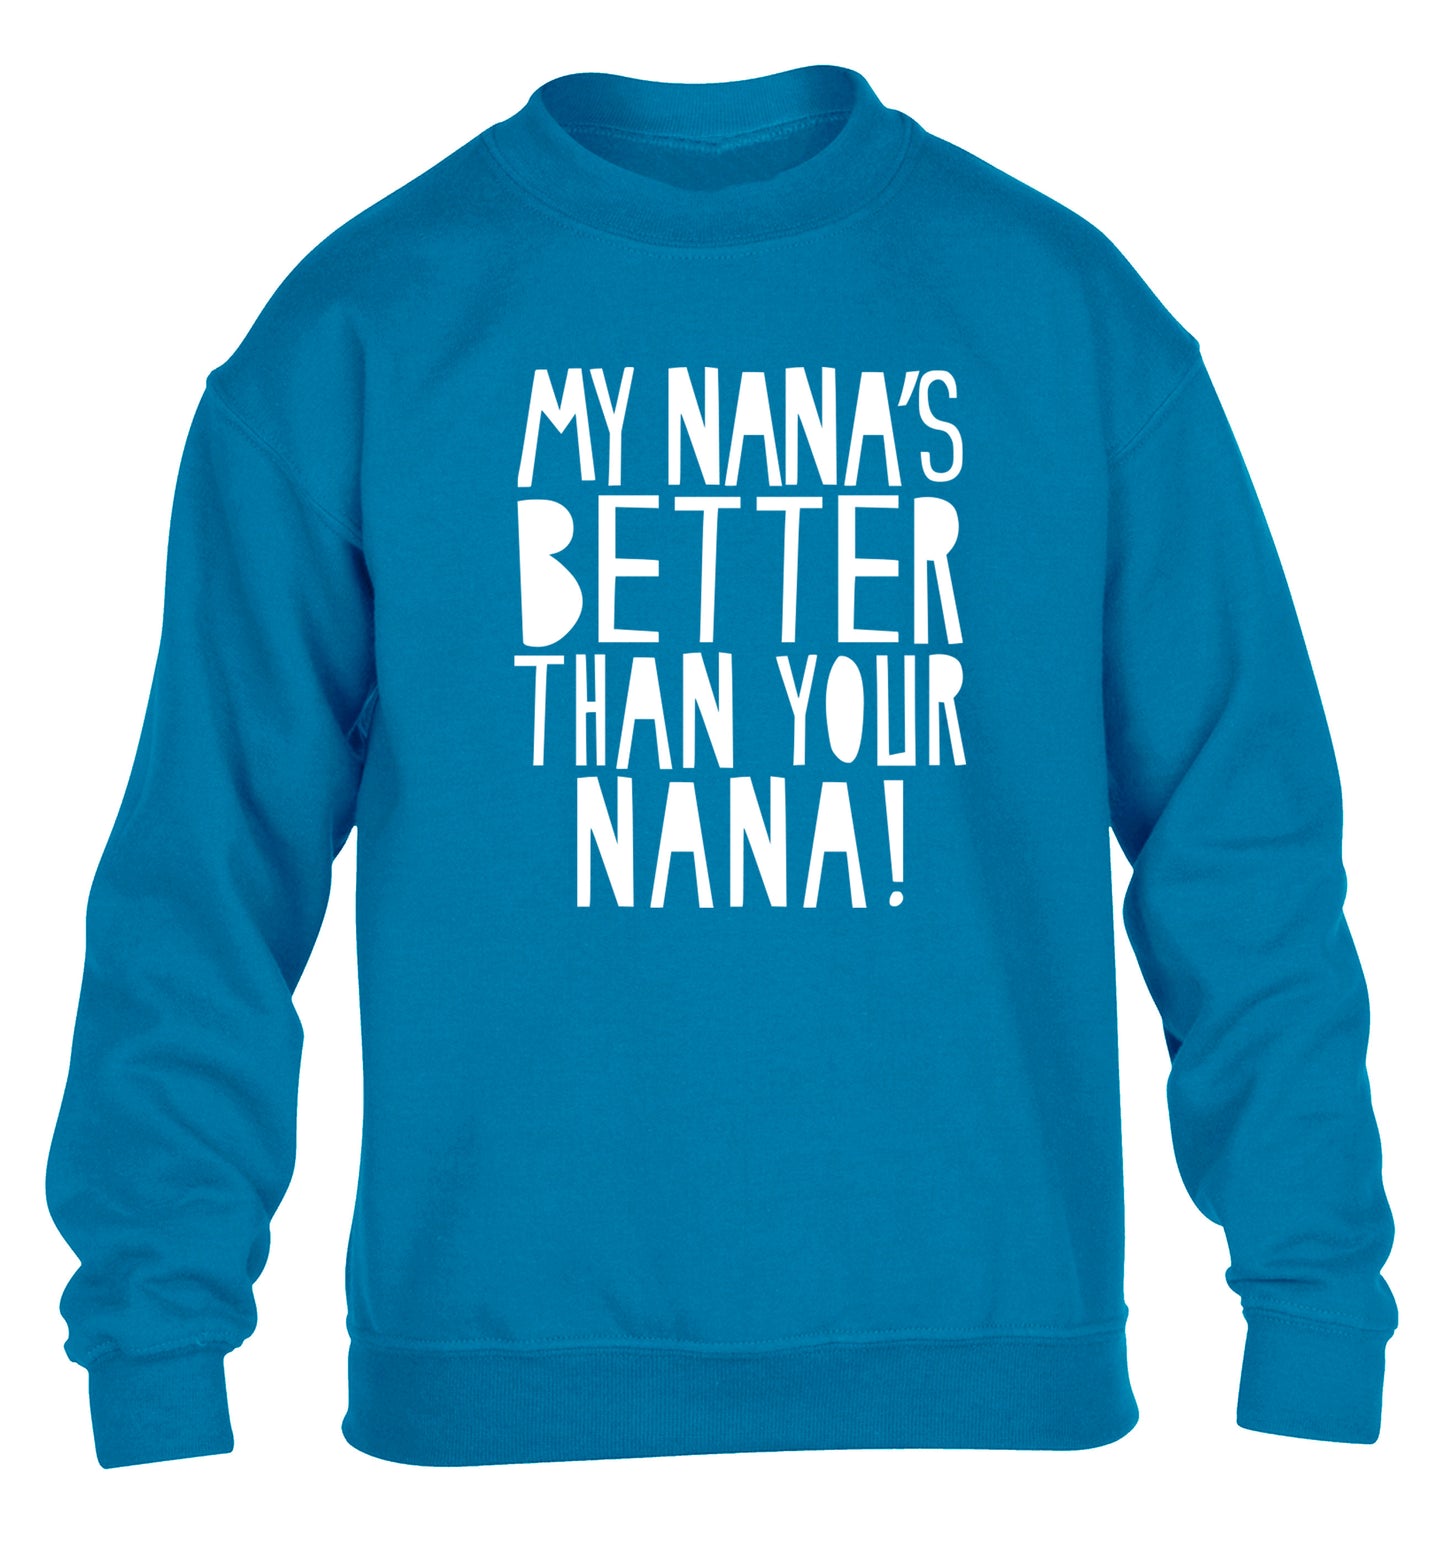 My nana's better than your nana children's blue sweater 12-13 Years